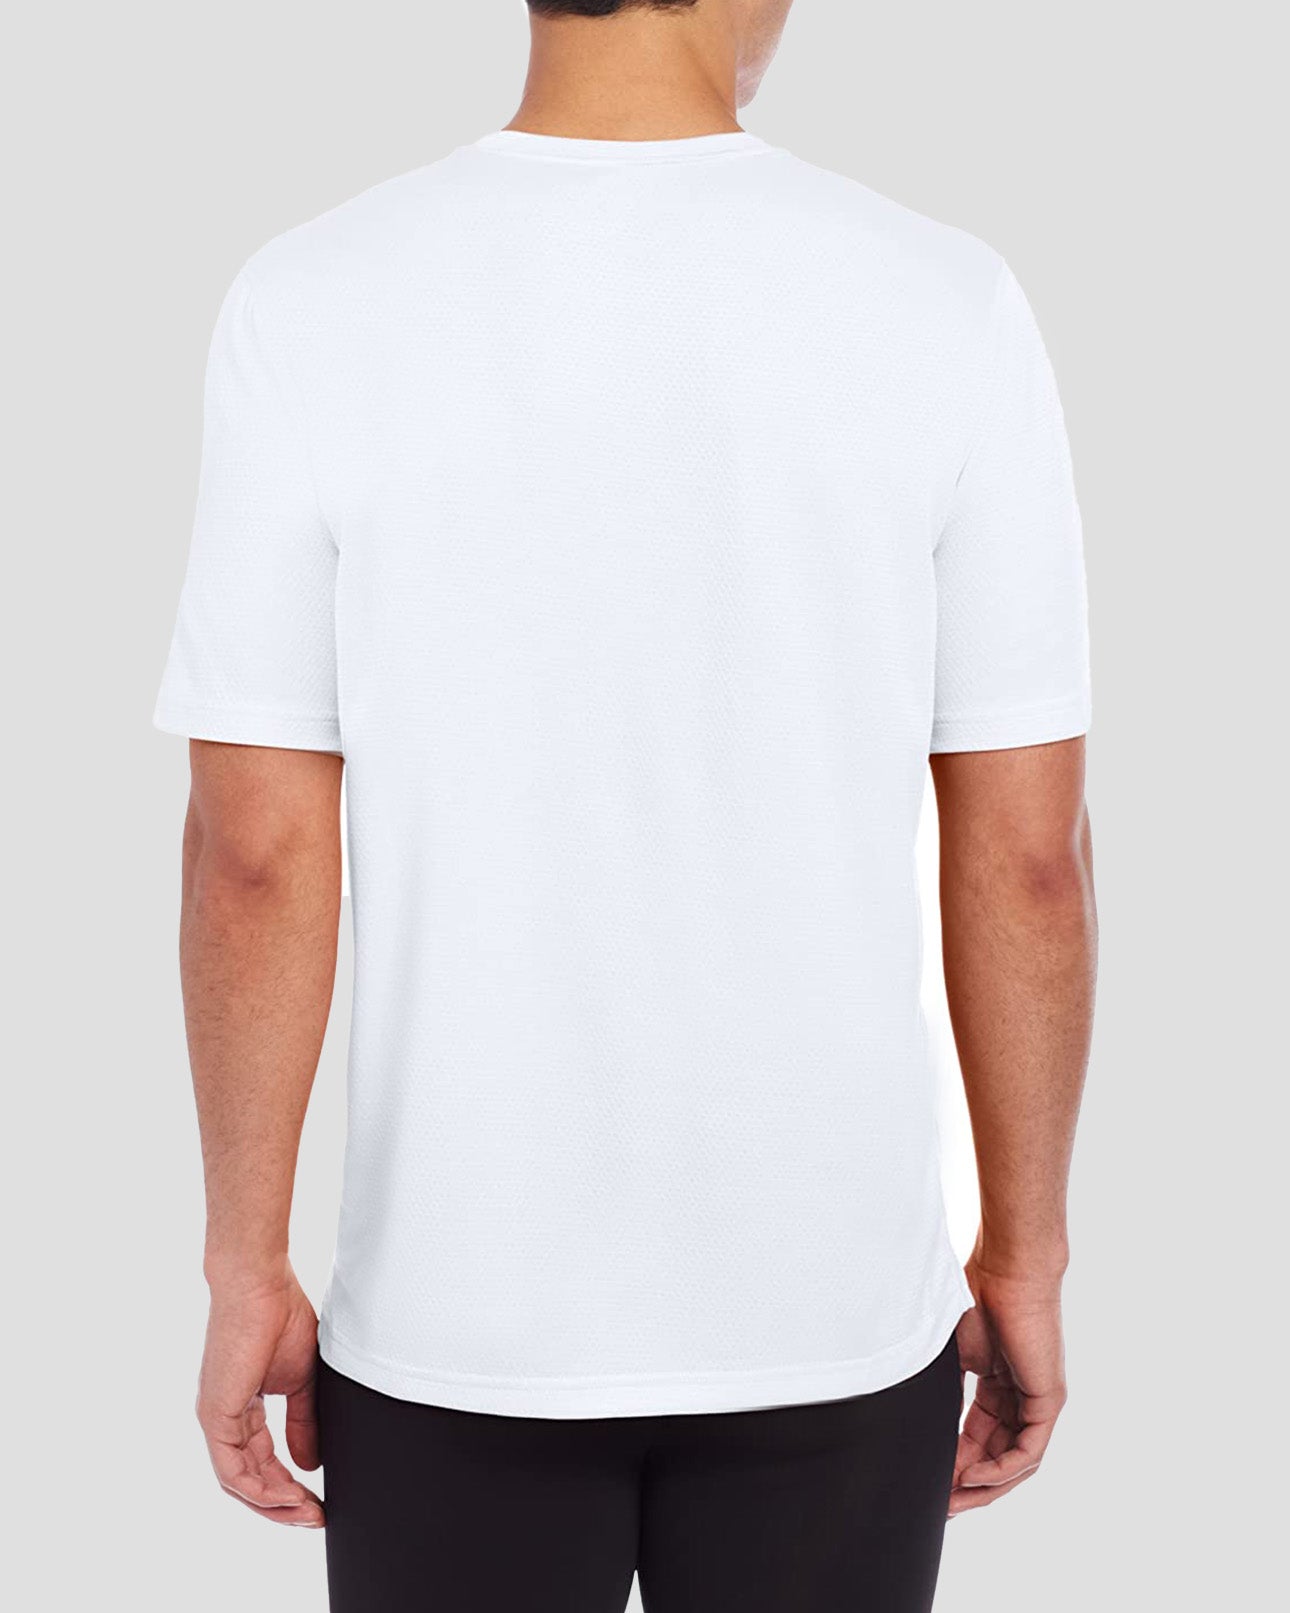 Men's Helix Mountain UPF 25 Short-Sleeve Crew Shirt | Color: White